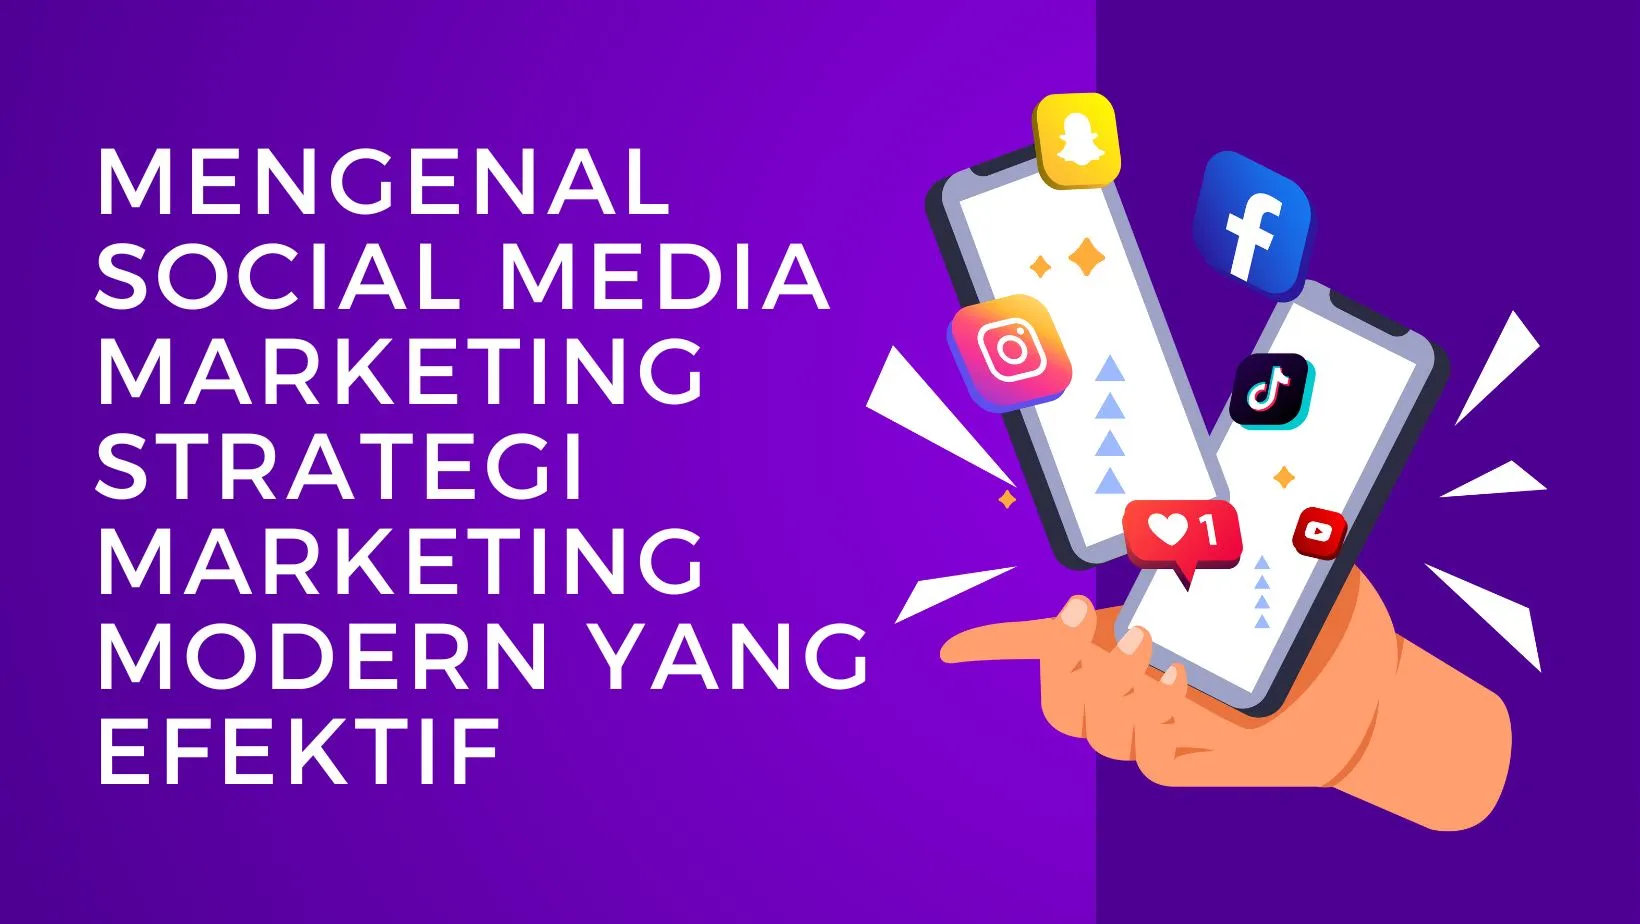 Mengenal Social Media Marketing: Strategi Marketing Modern yang Efektif